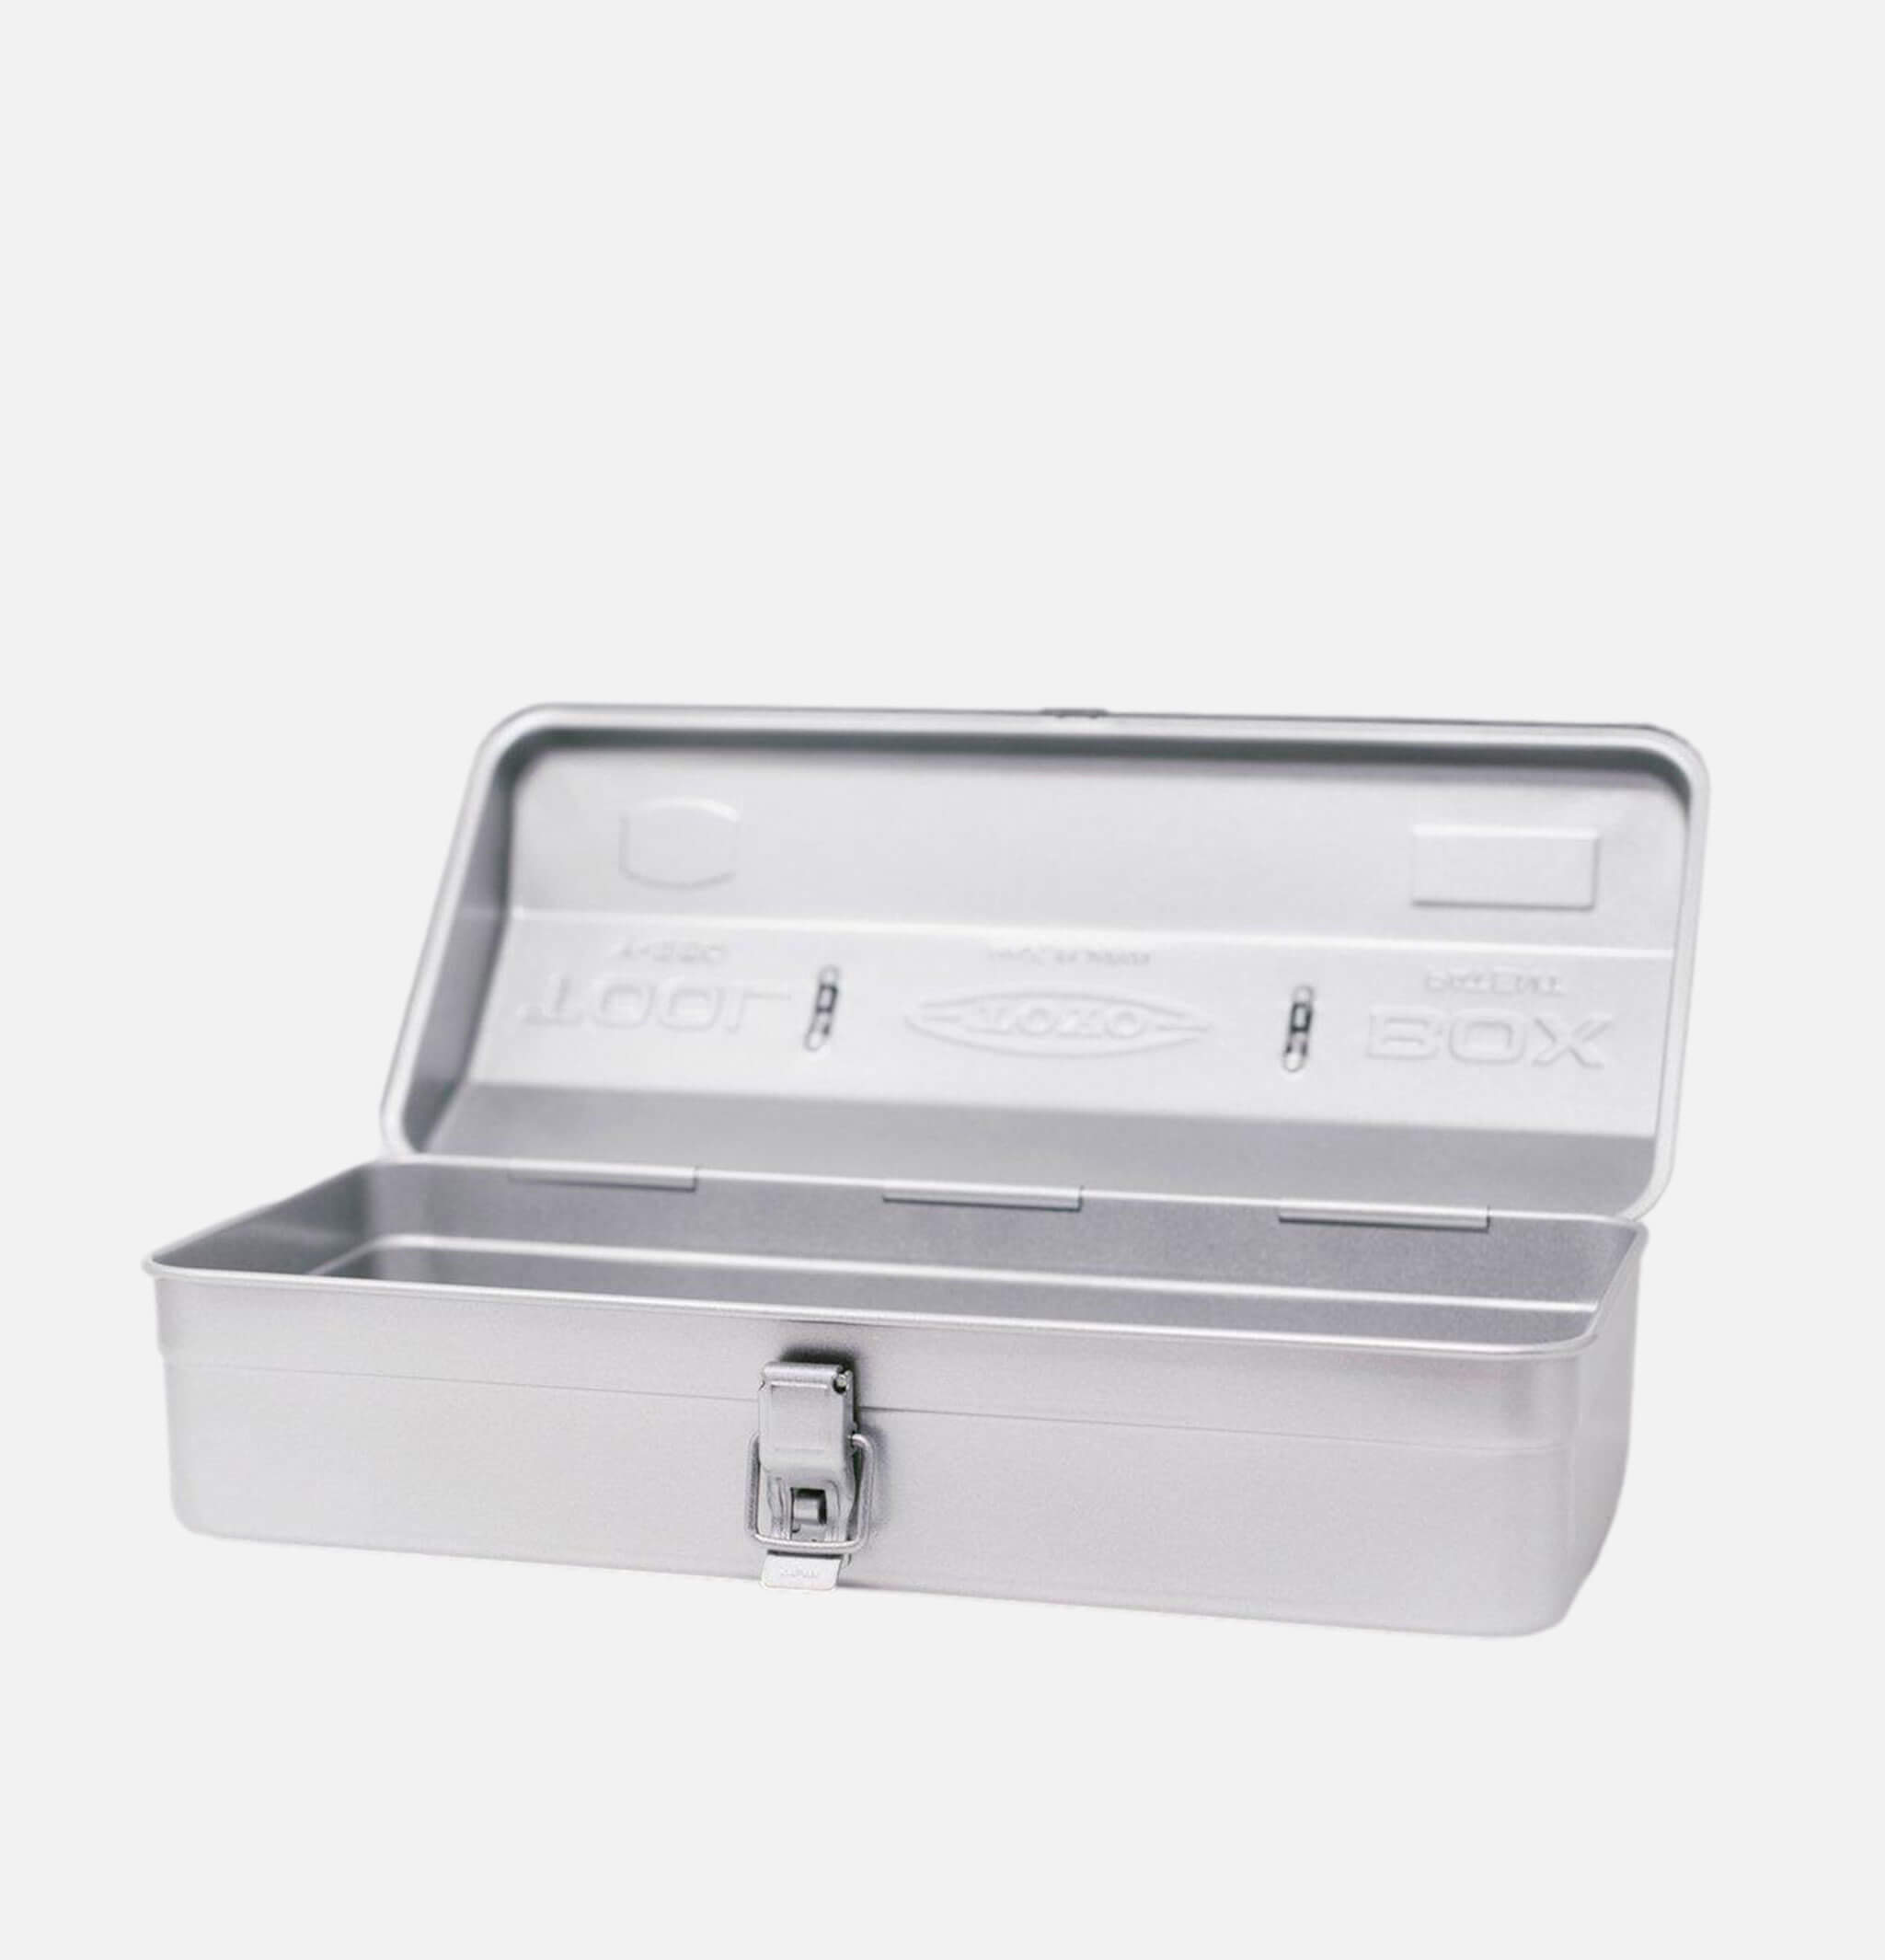 Toyo Steel Y350 Tool Box Silver